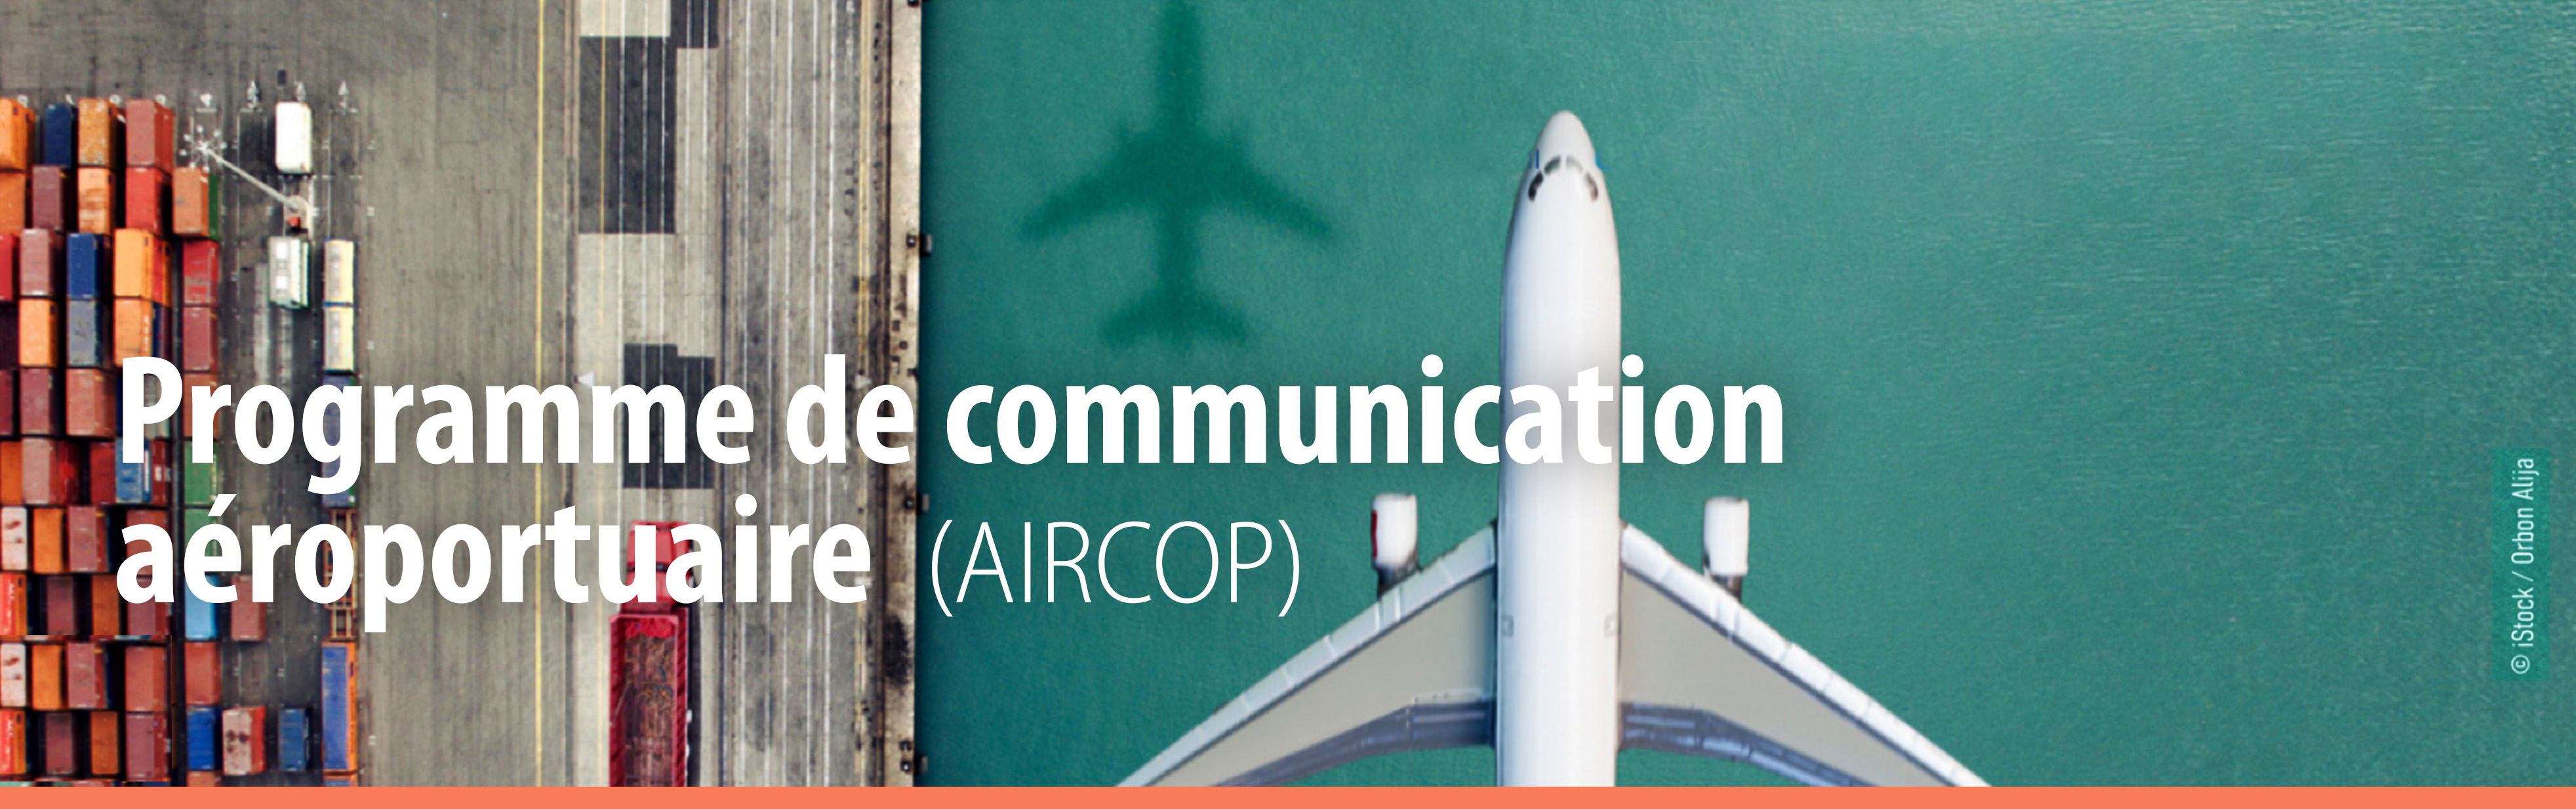 Airport Communication Programme ( AIRCOP )